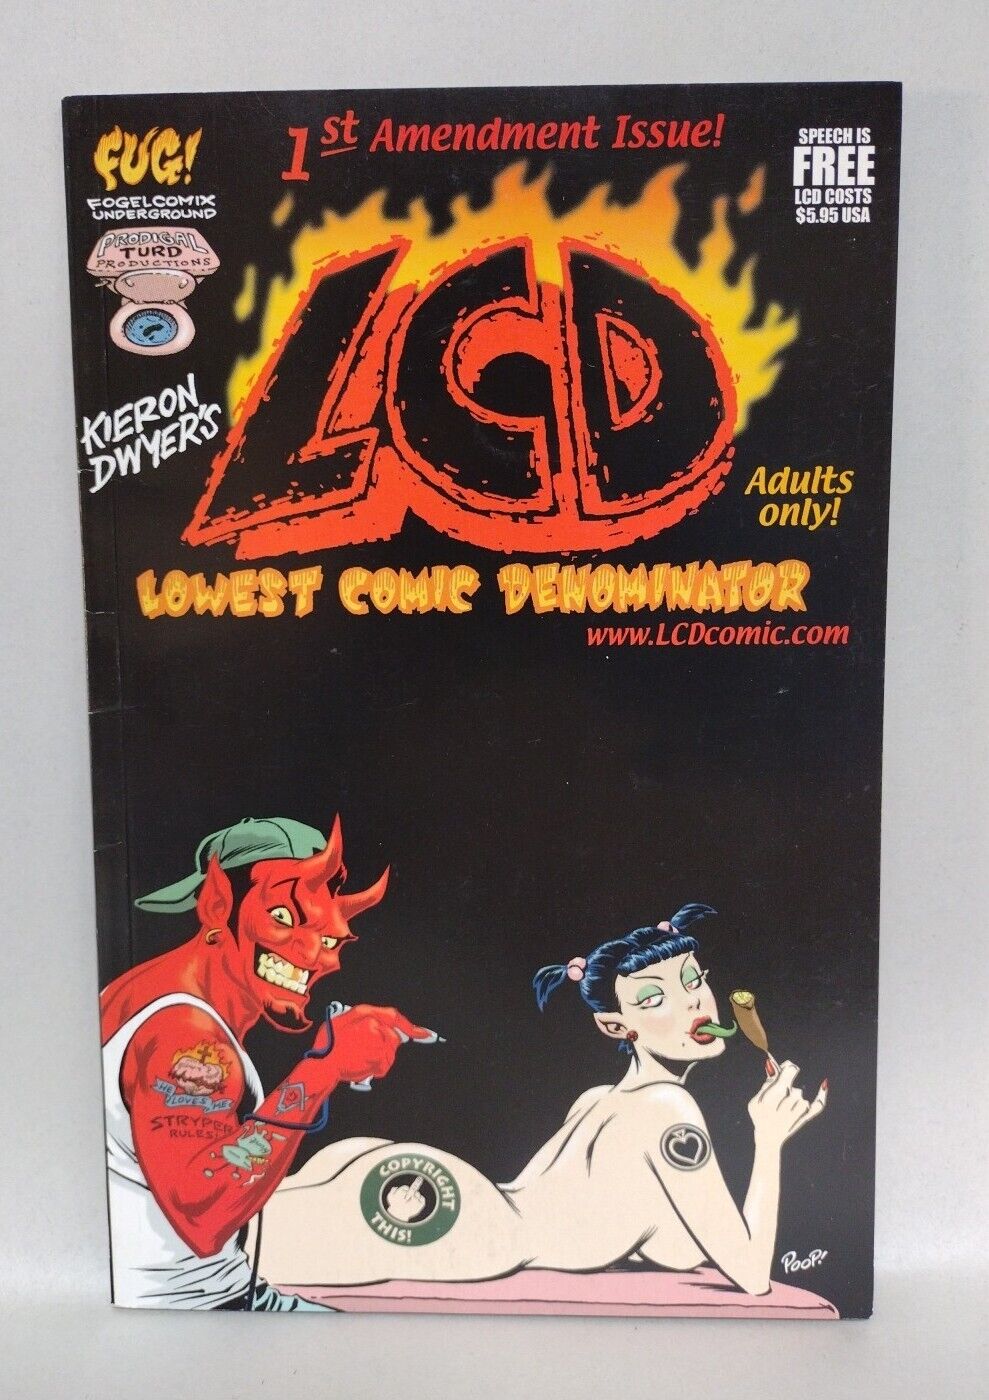 LCD Lowest Comic Denominator (2000) #1 Fogel Rick Remender Kieron Dwyer Comix